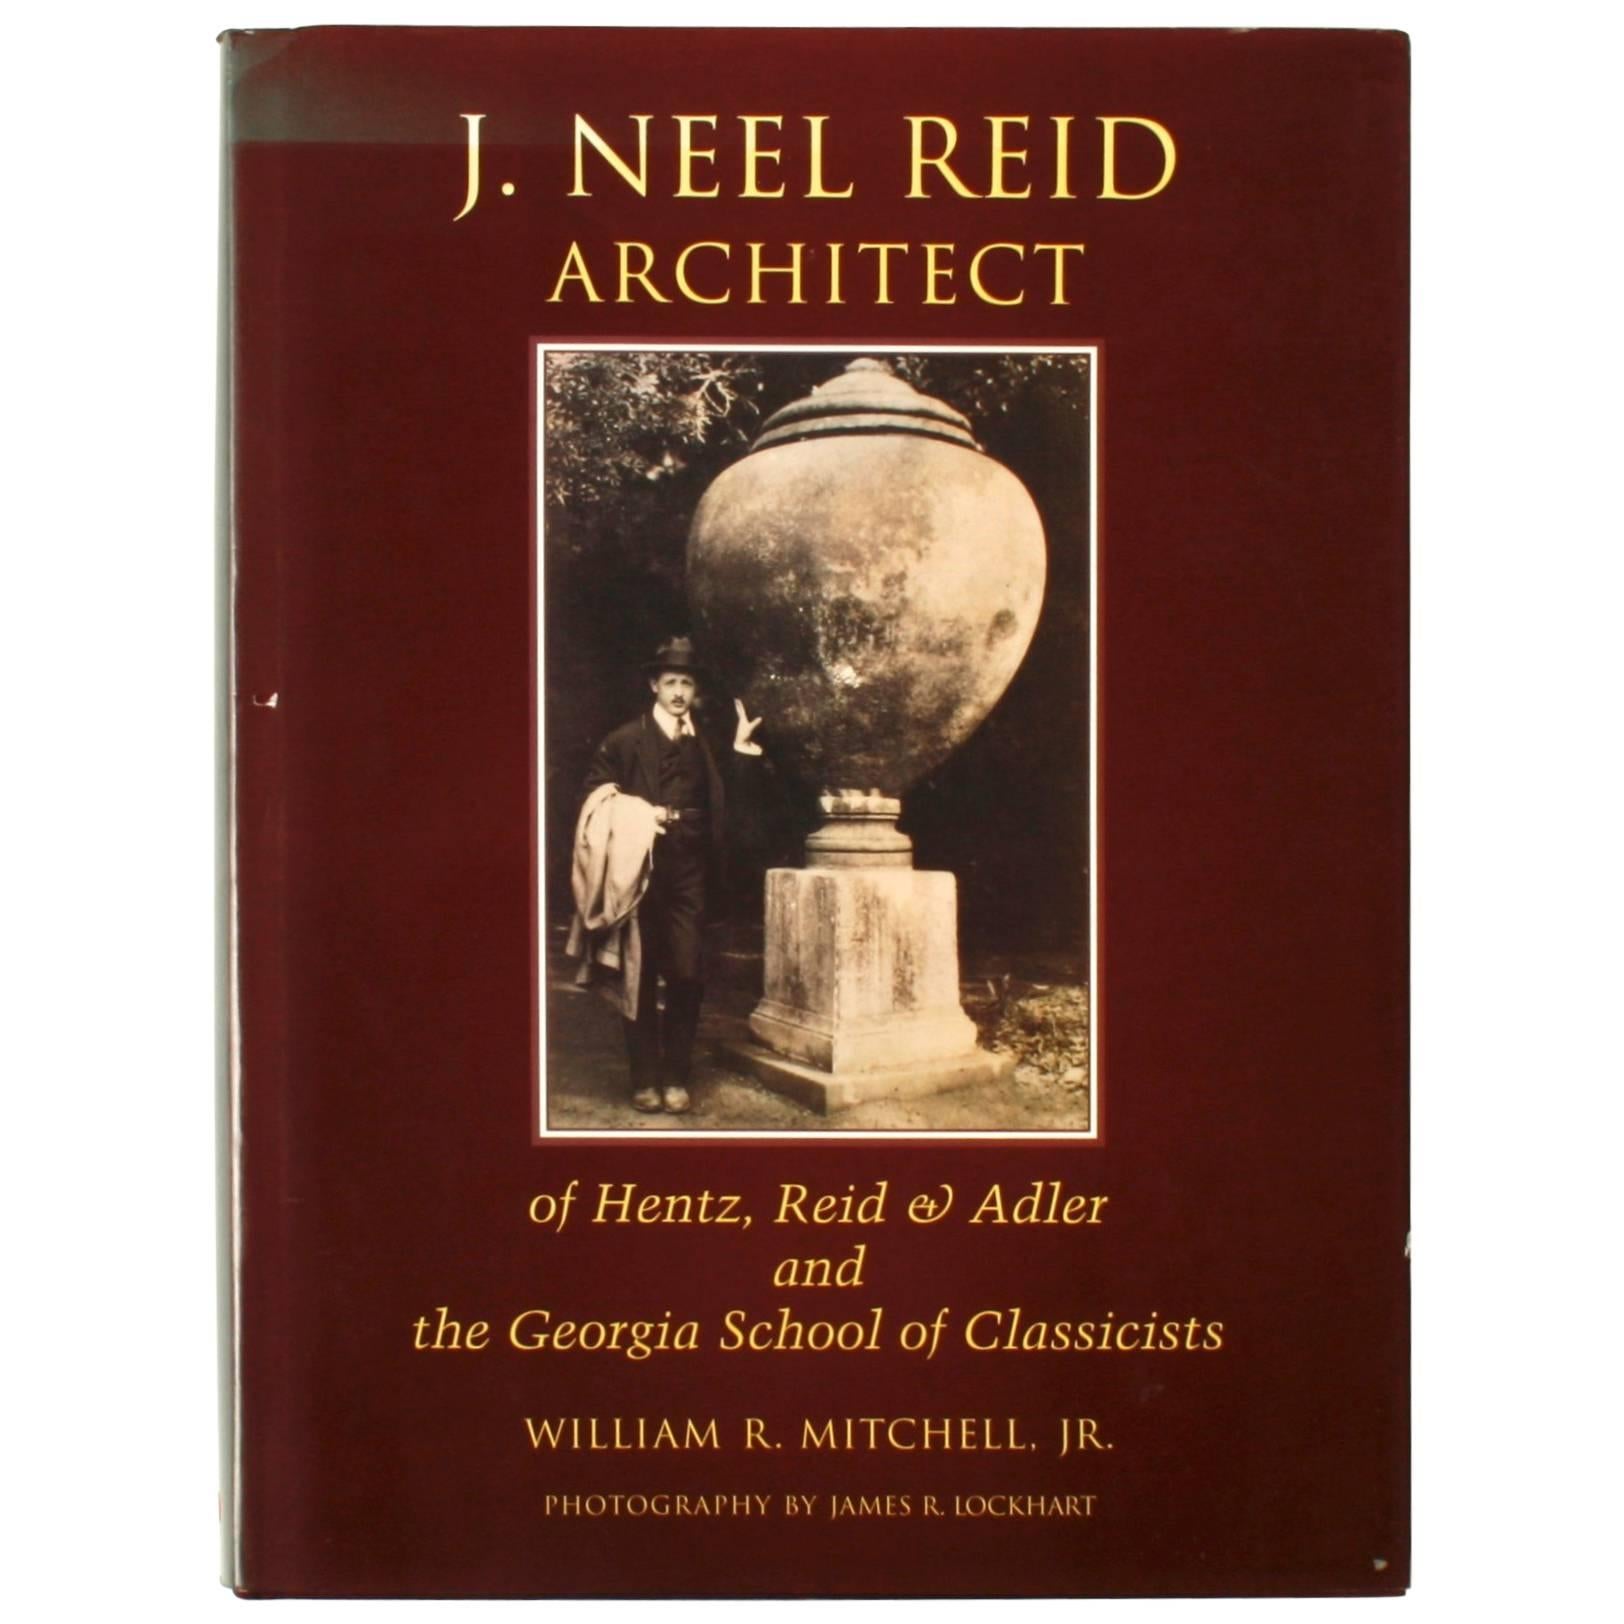 J. Neel Reid Architect by William R. Mitchell, Jr., First Edition